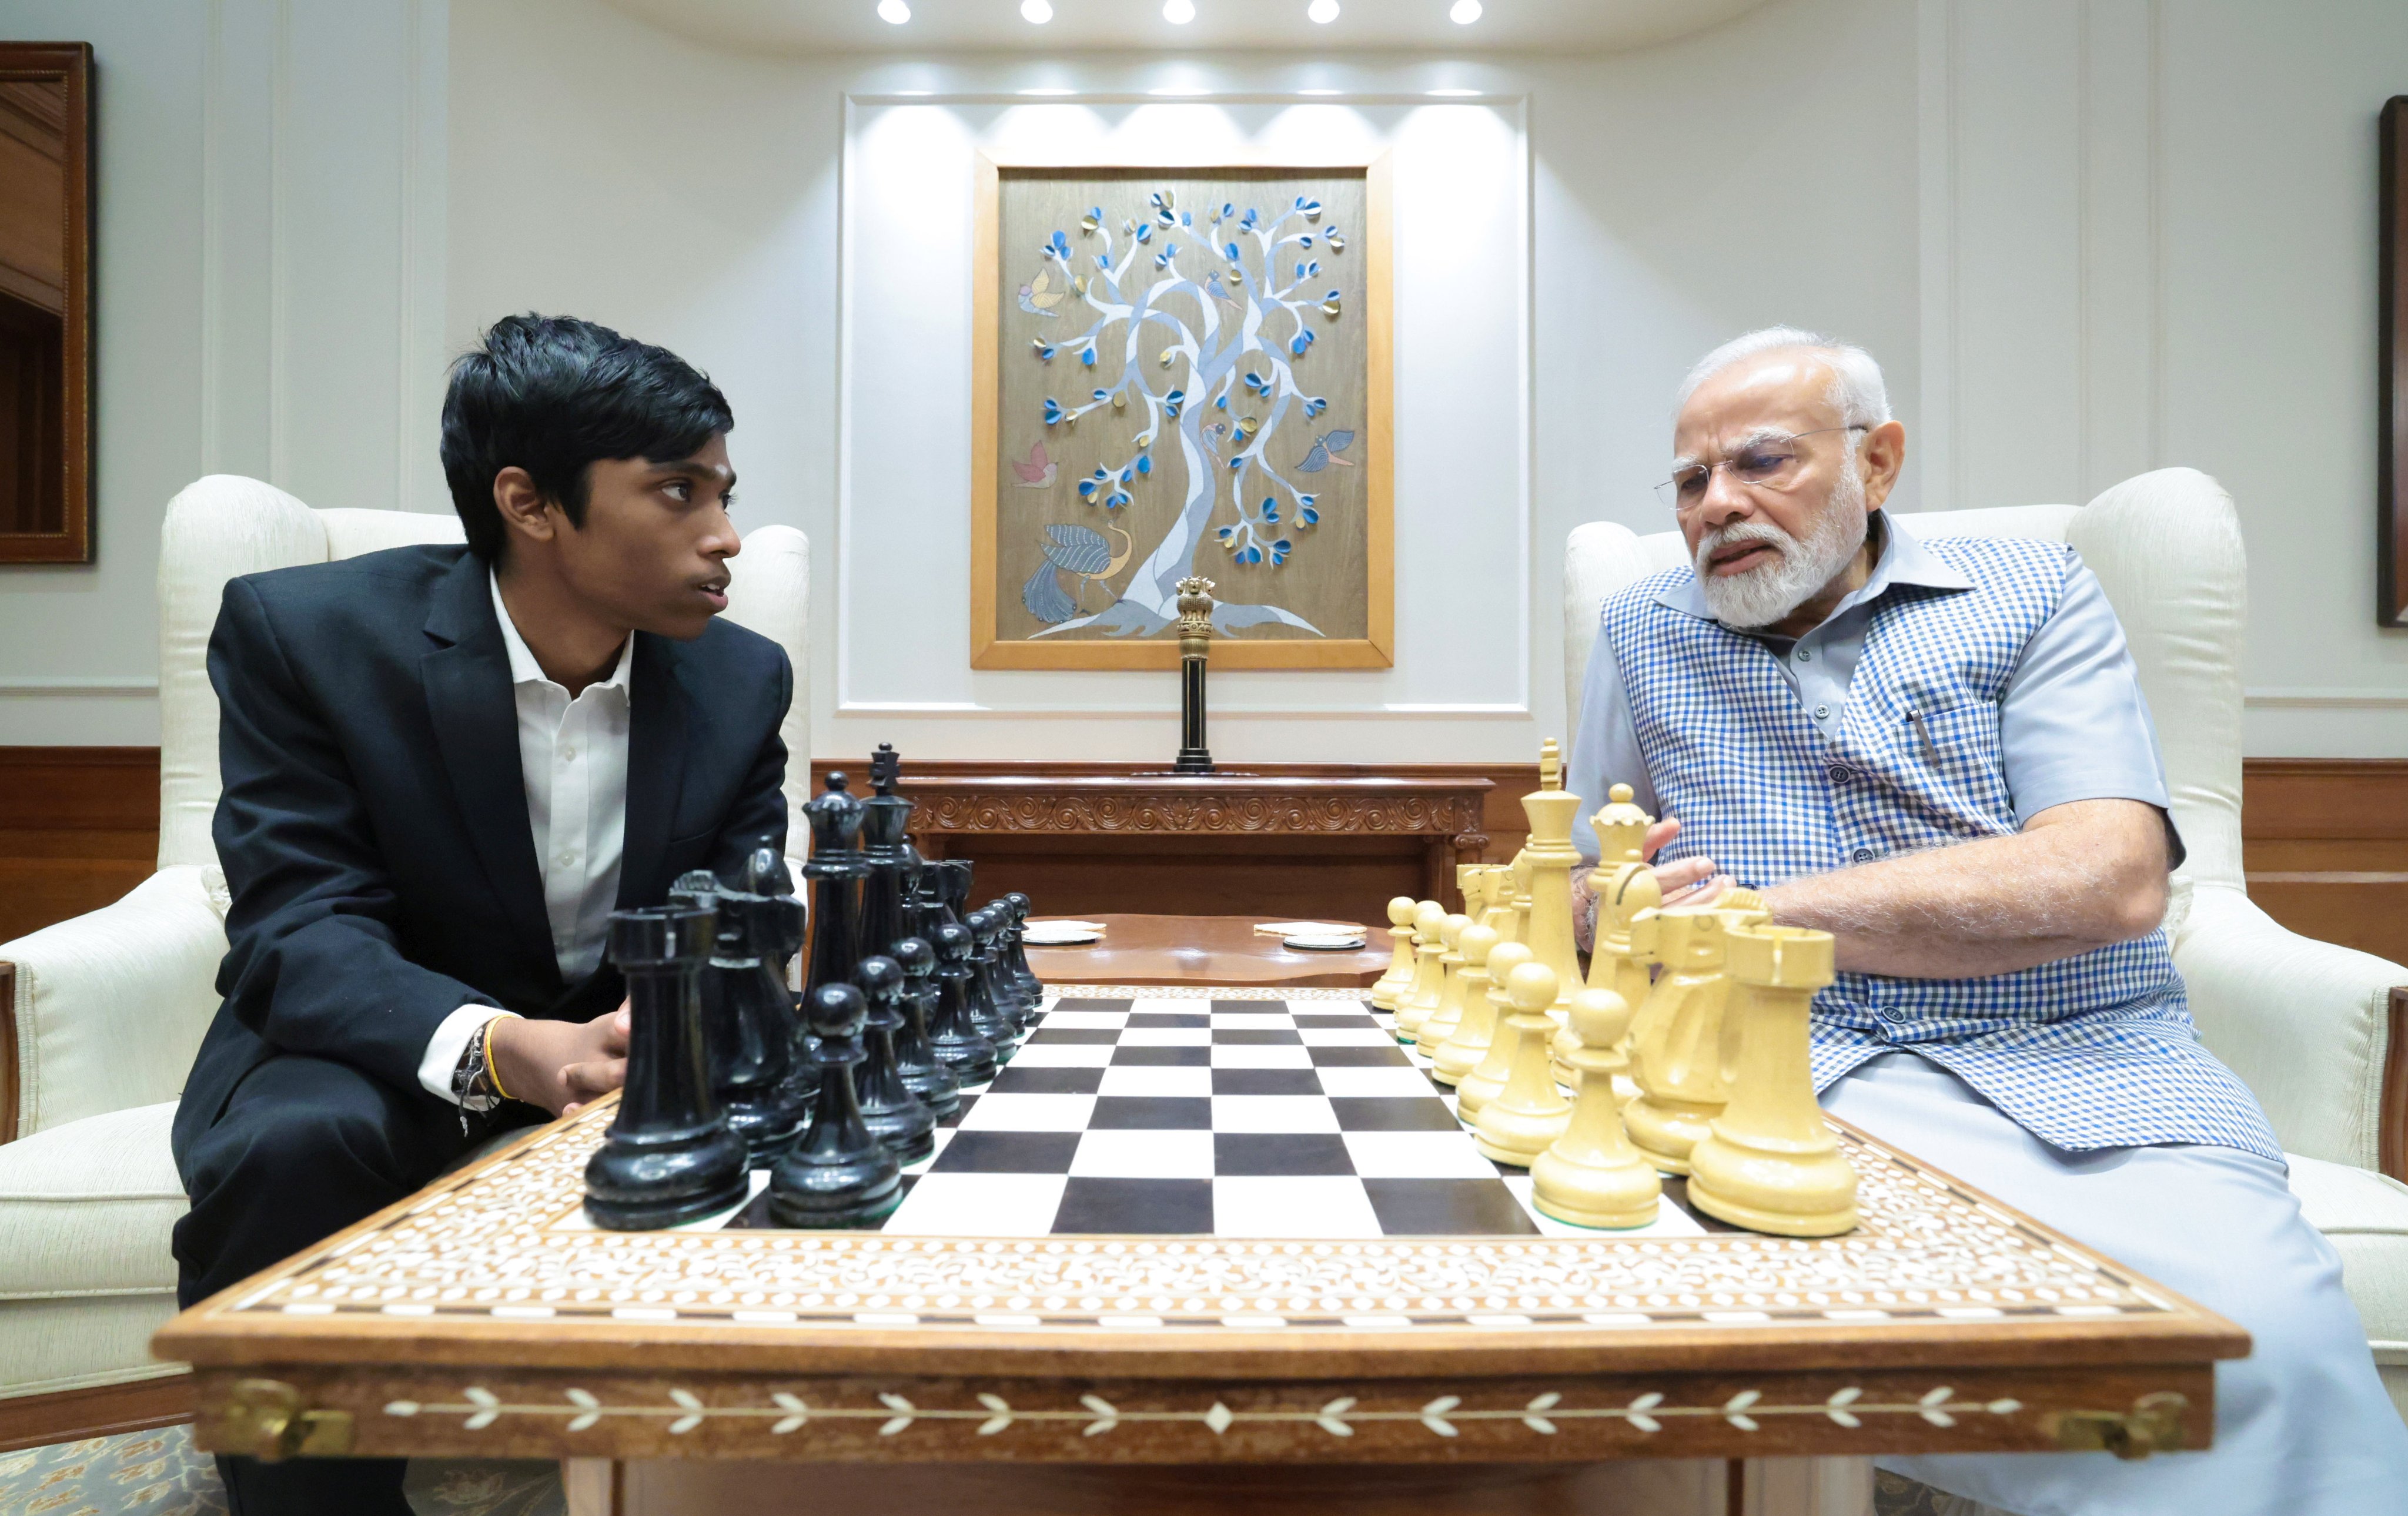 PM Modi meets chess prodigy Praggnanandhaa